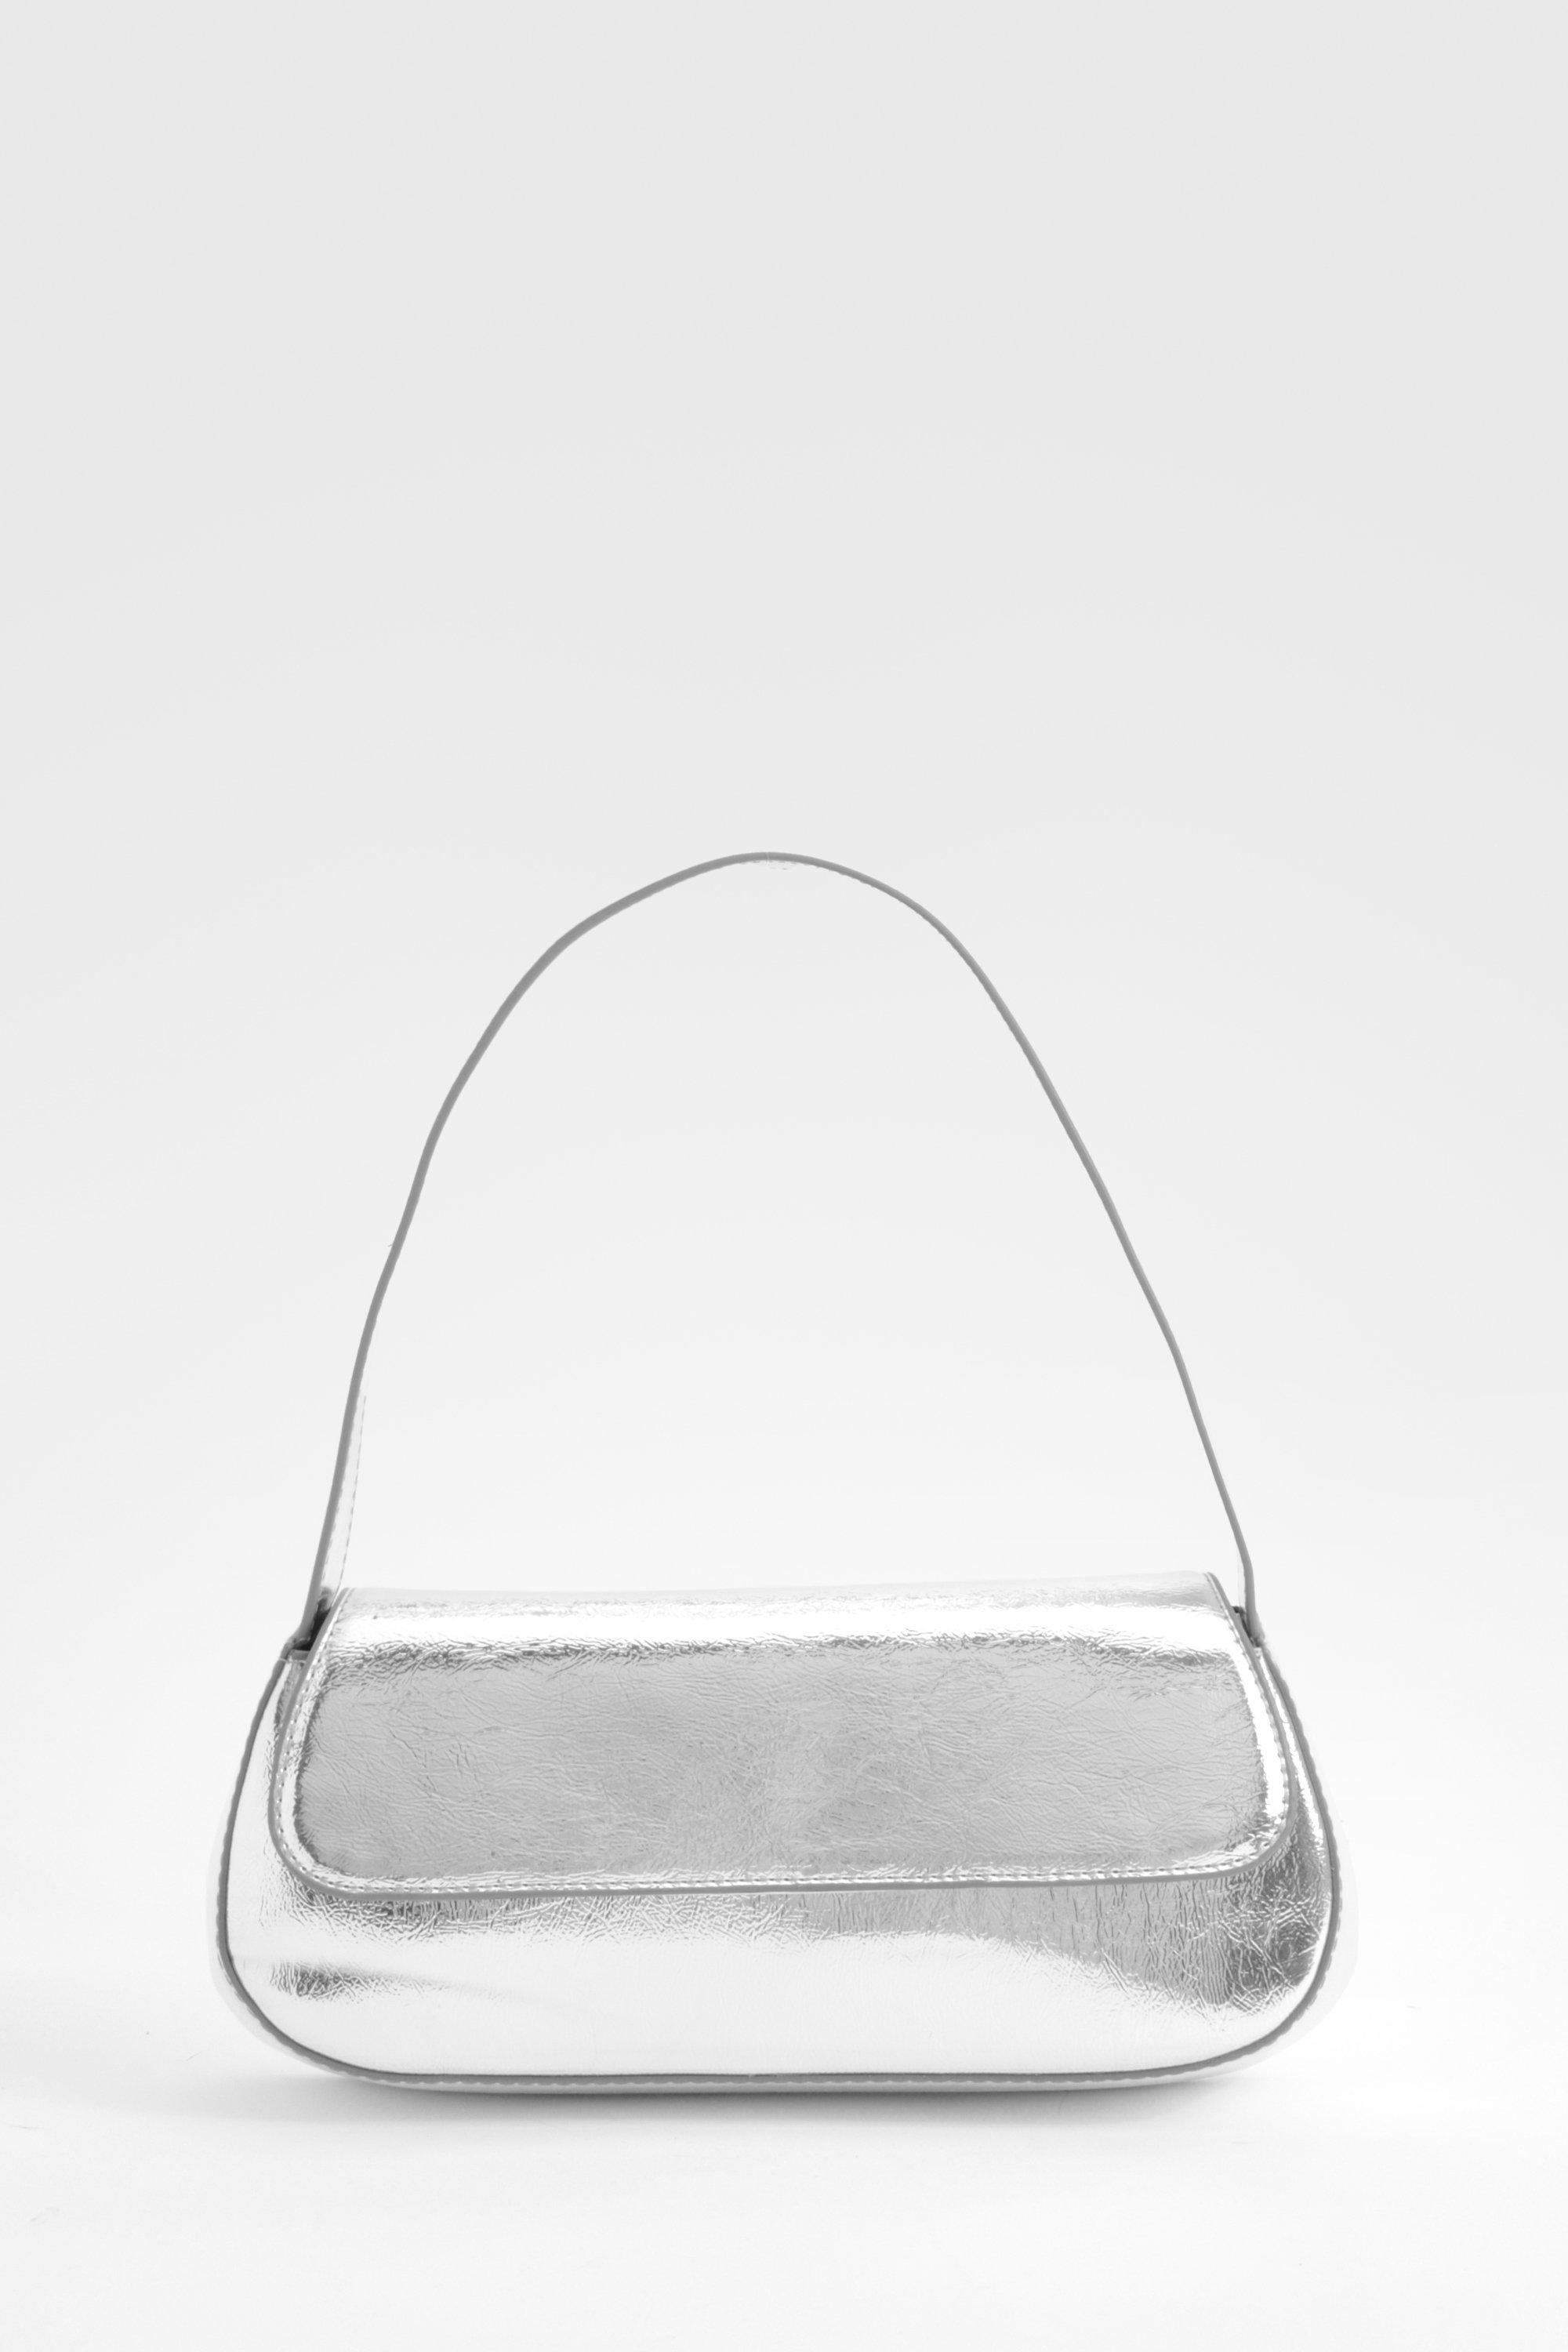 Image of Patent Structured Foldover Shoulder Bag, Grigio